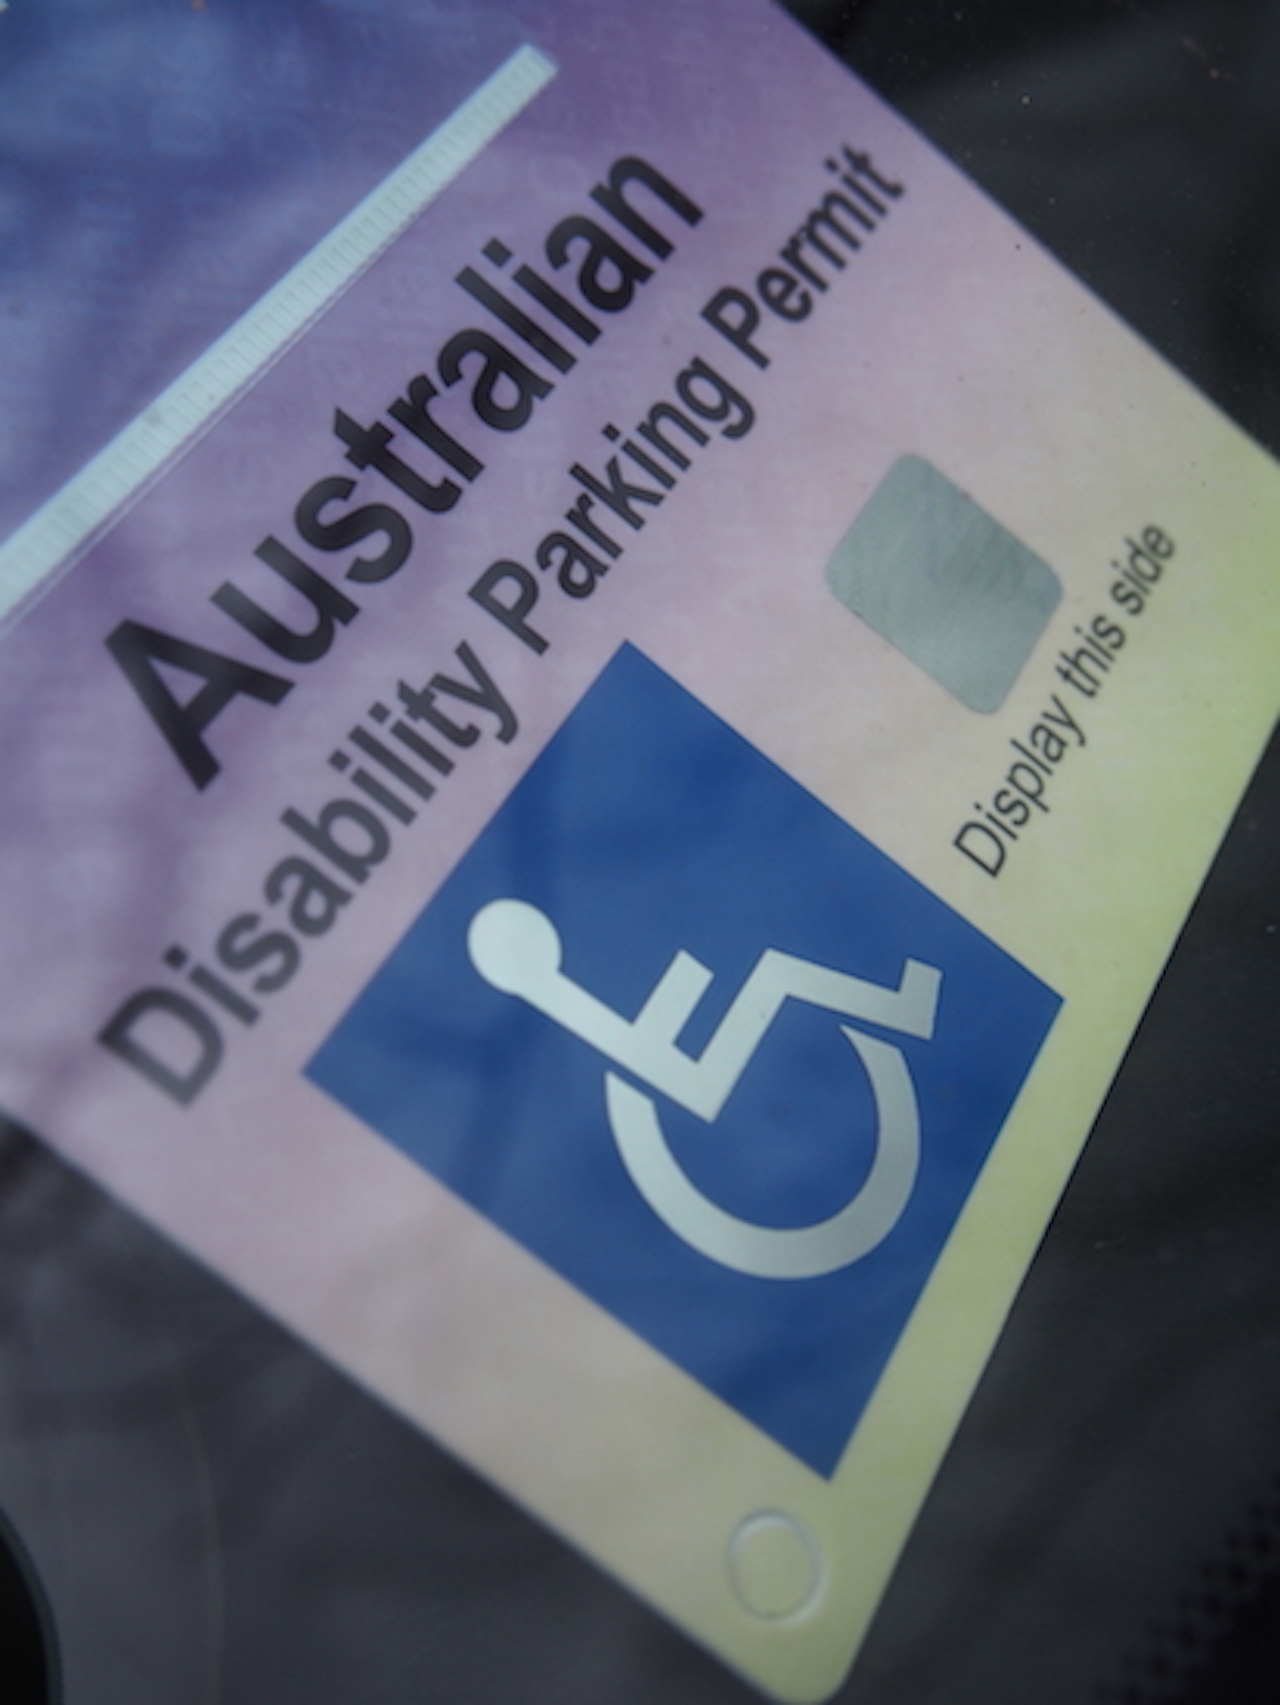 disability parking permit